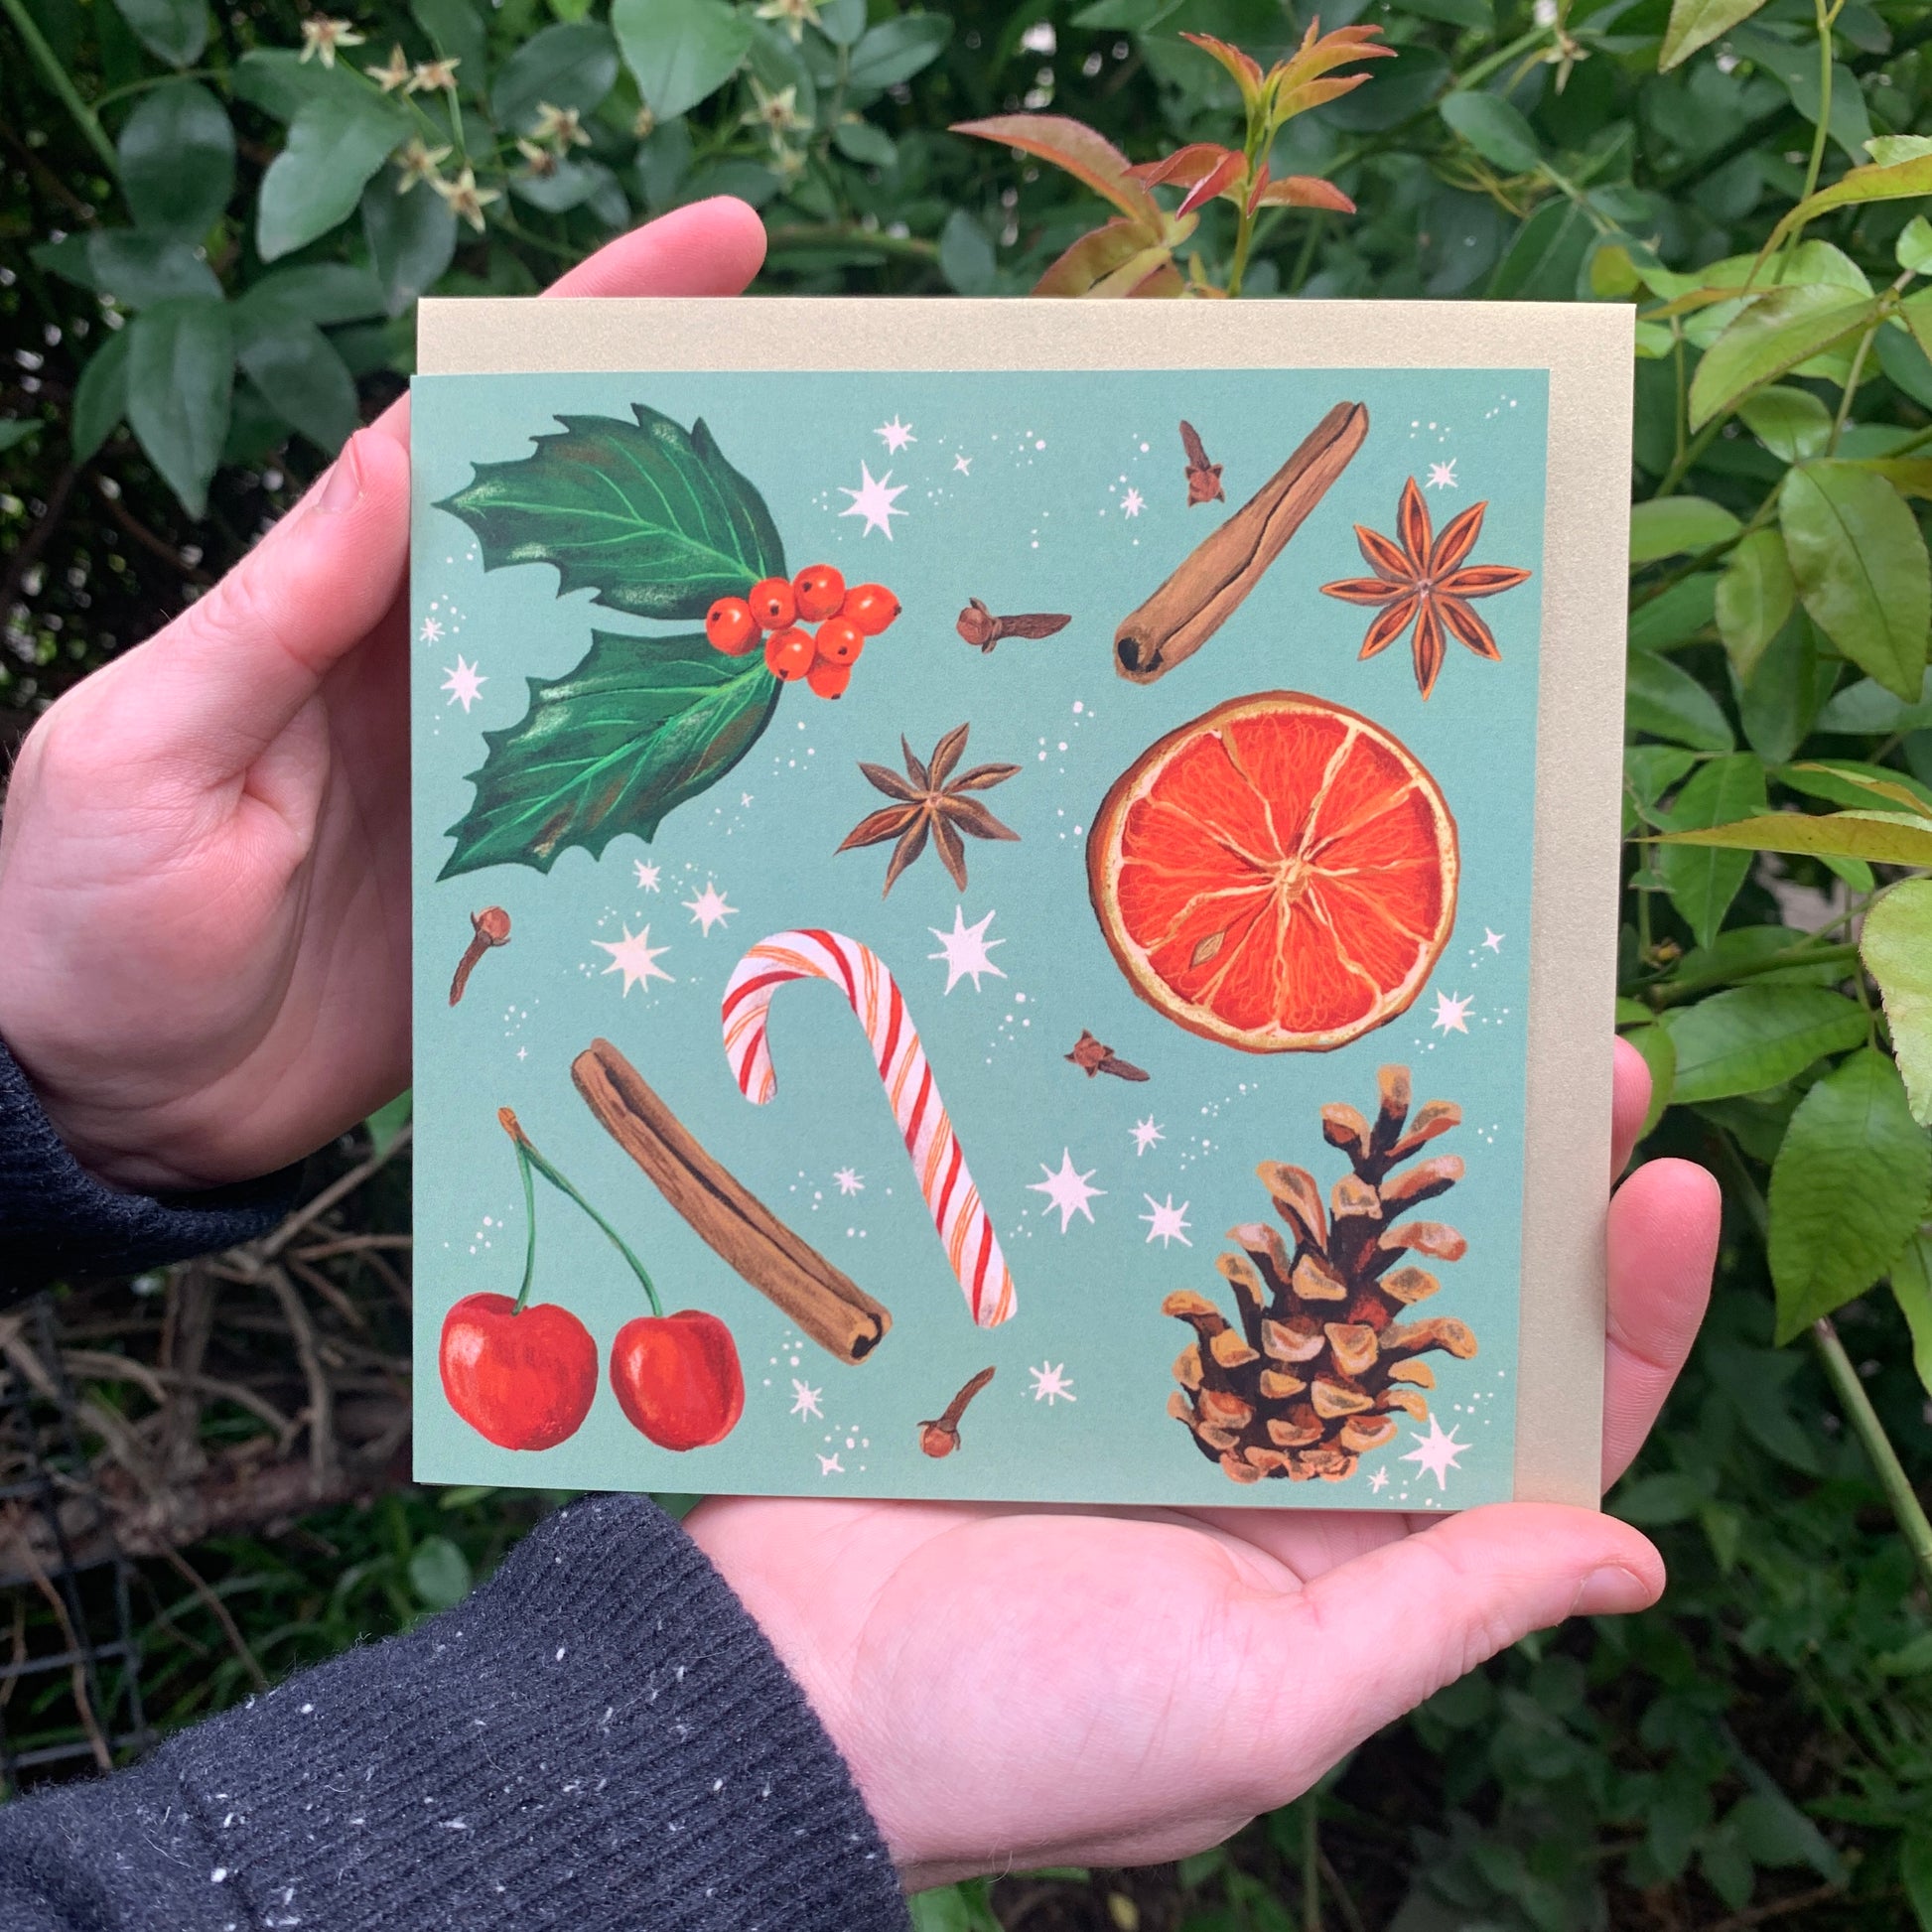 Anna Seed Art | Illustrated Christmas Card! "Australian Christmas" (Green) - Blank square seasonal greeting card